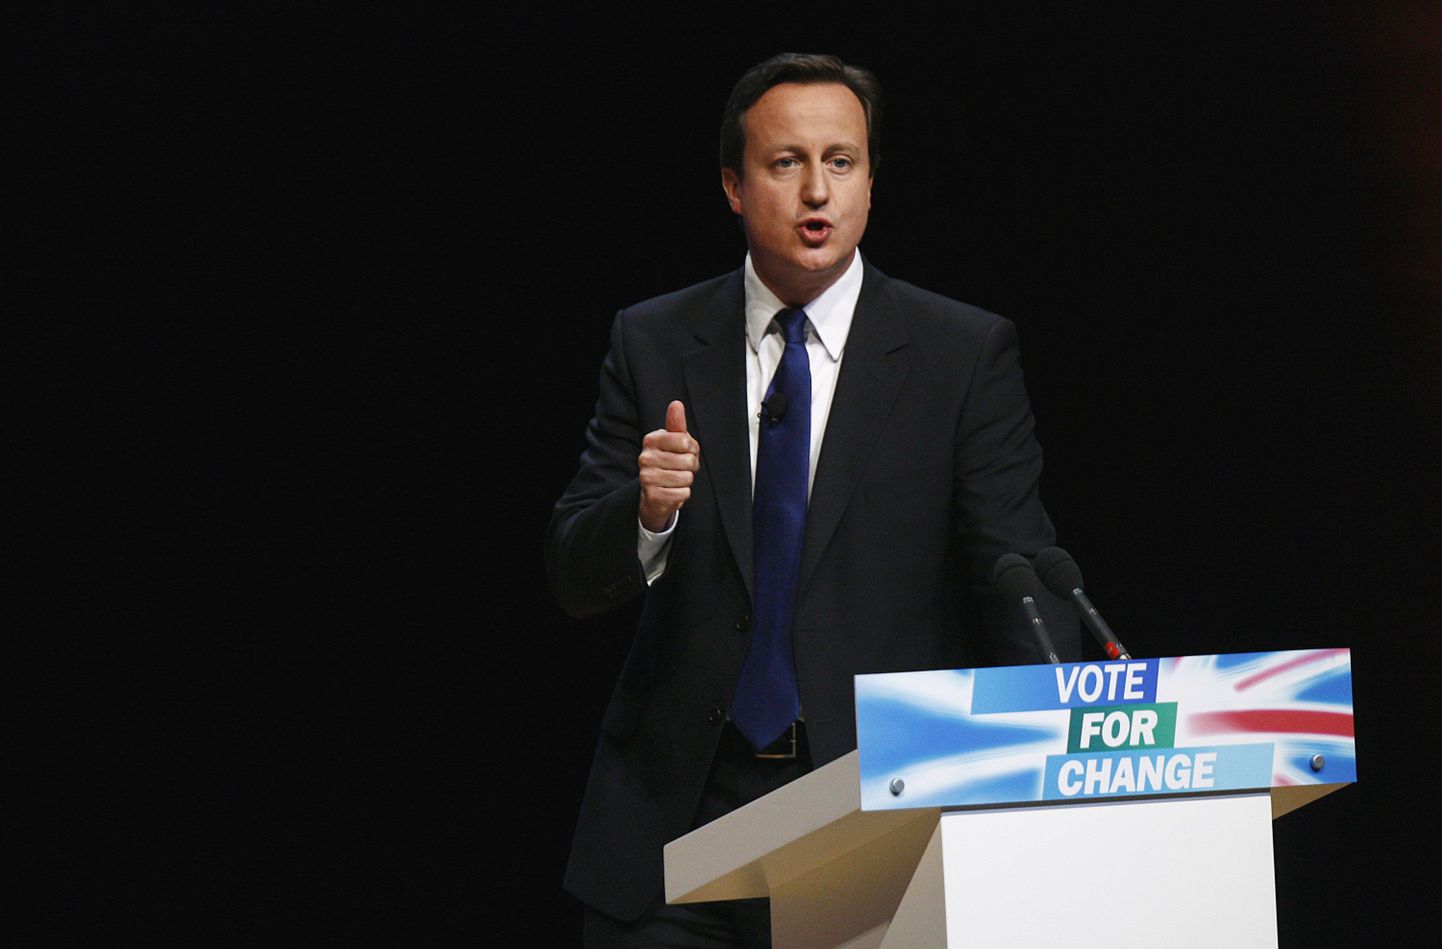 Briti konservatiivide liider David Cameron.